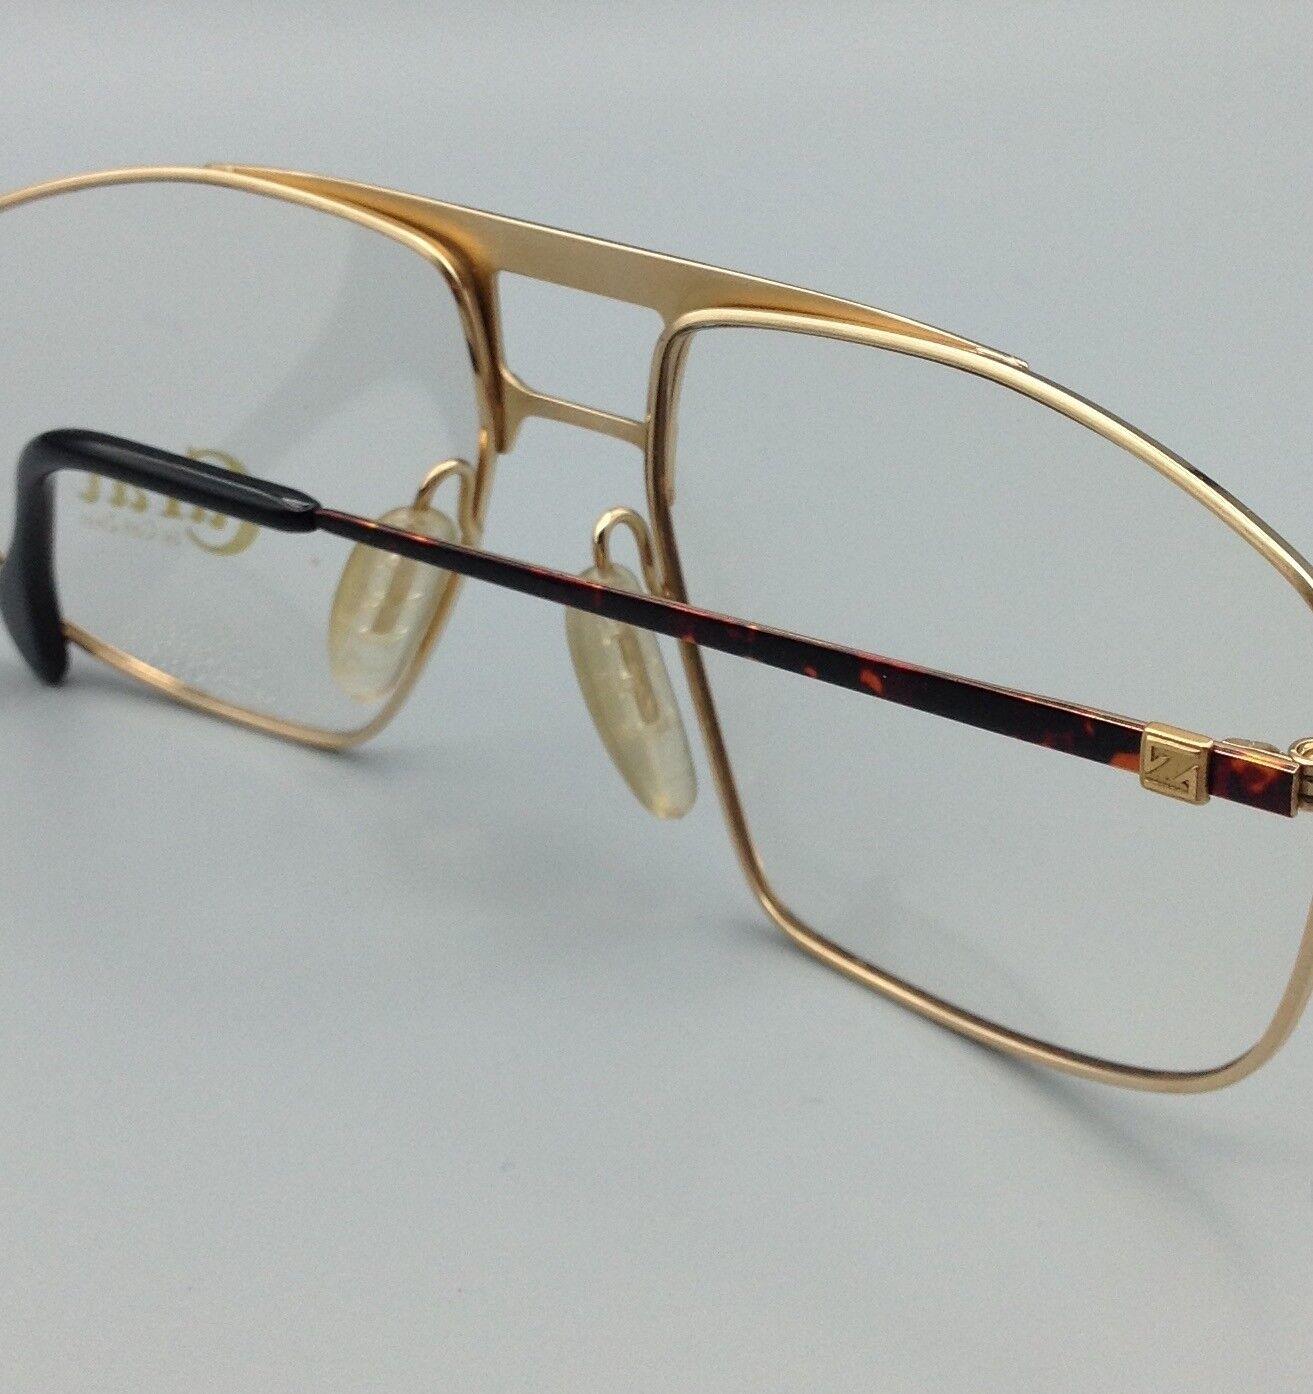 Carl Zeiss occhiali Titanium 80s eyeglasses made in Germany model 5959 4100